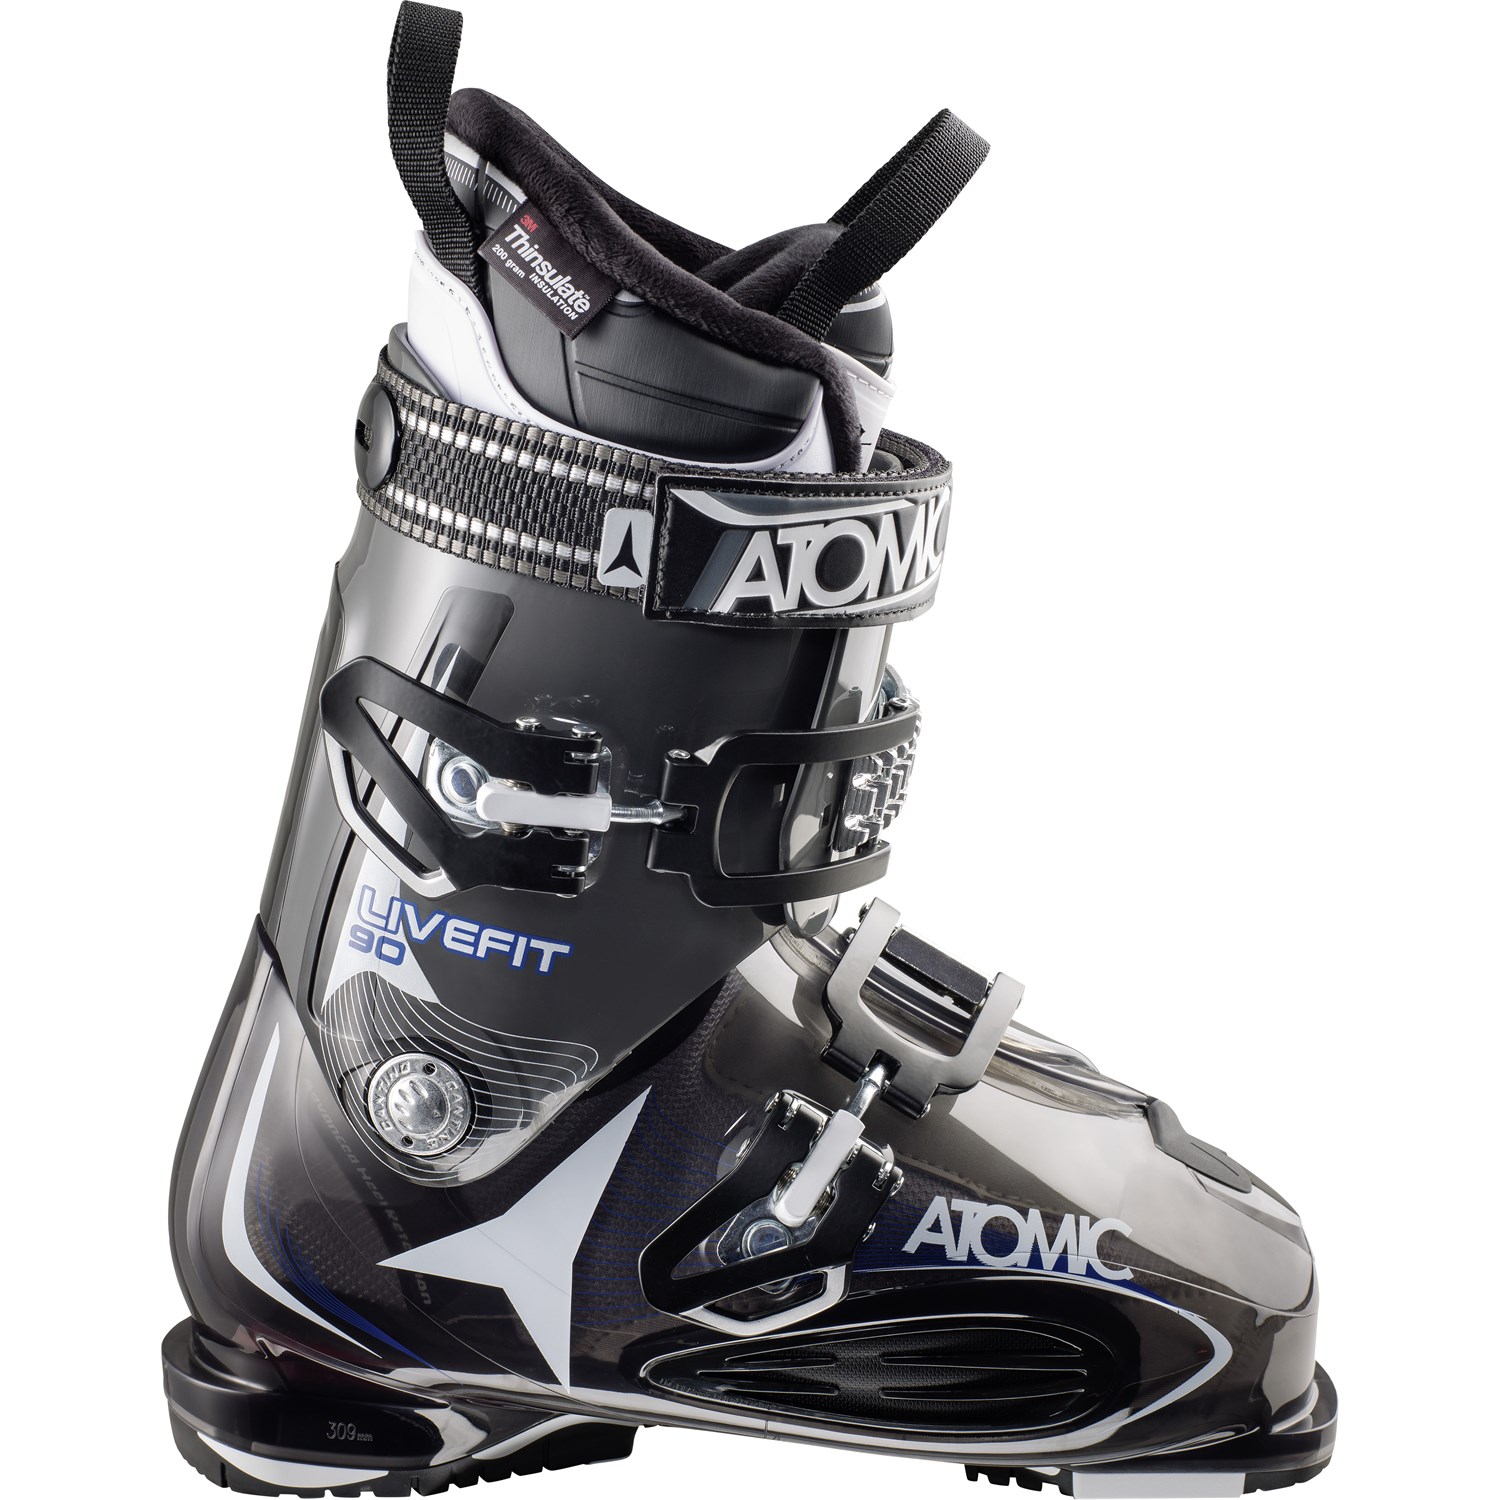 Atomic Live Fit 90 Ski Boots 2015